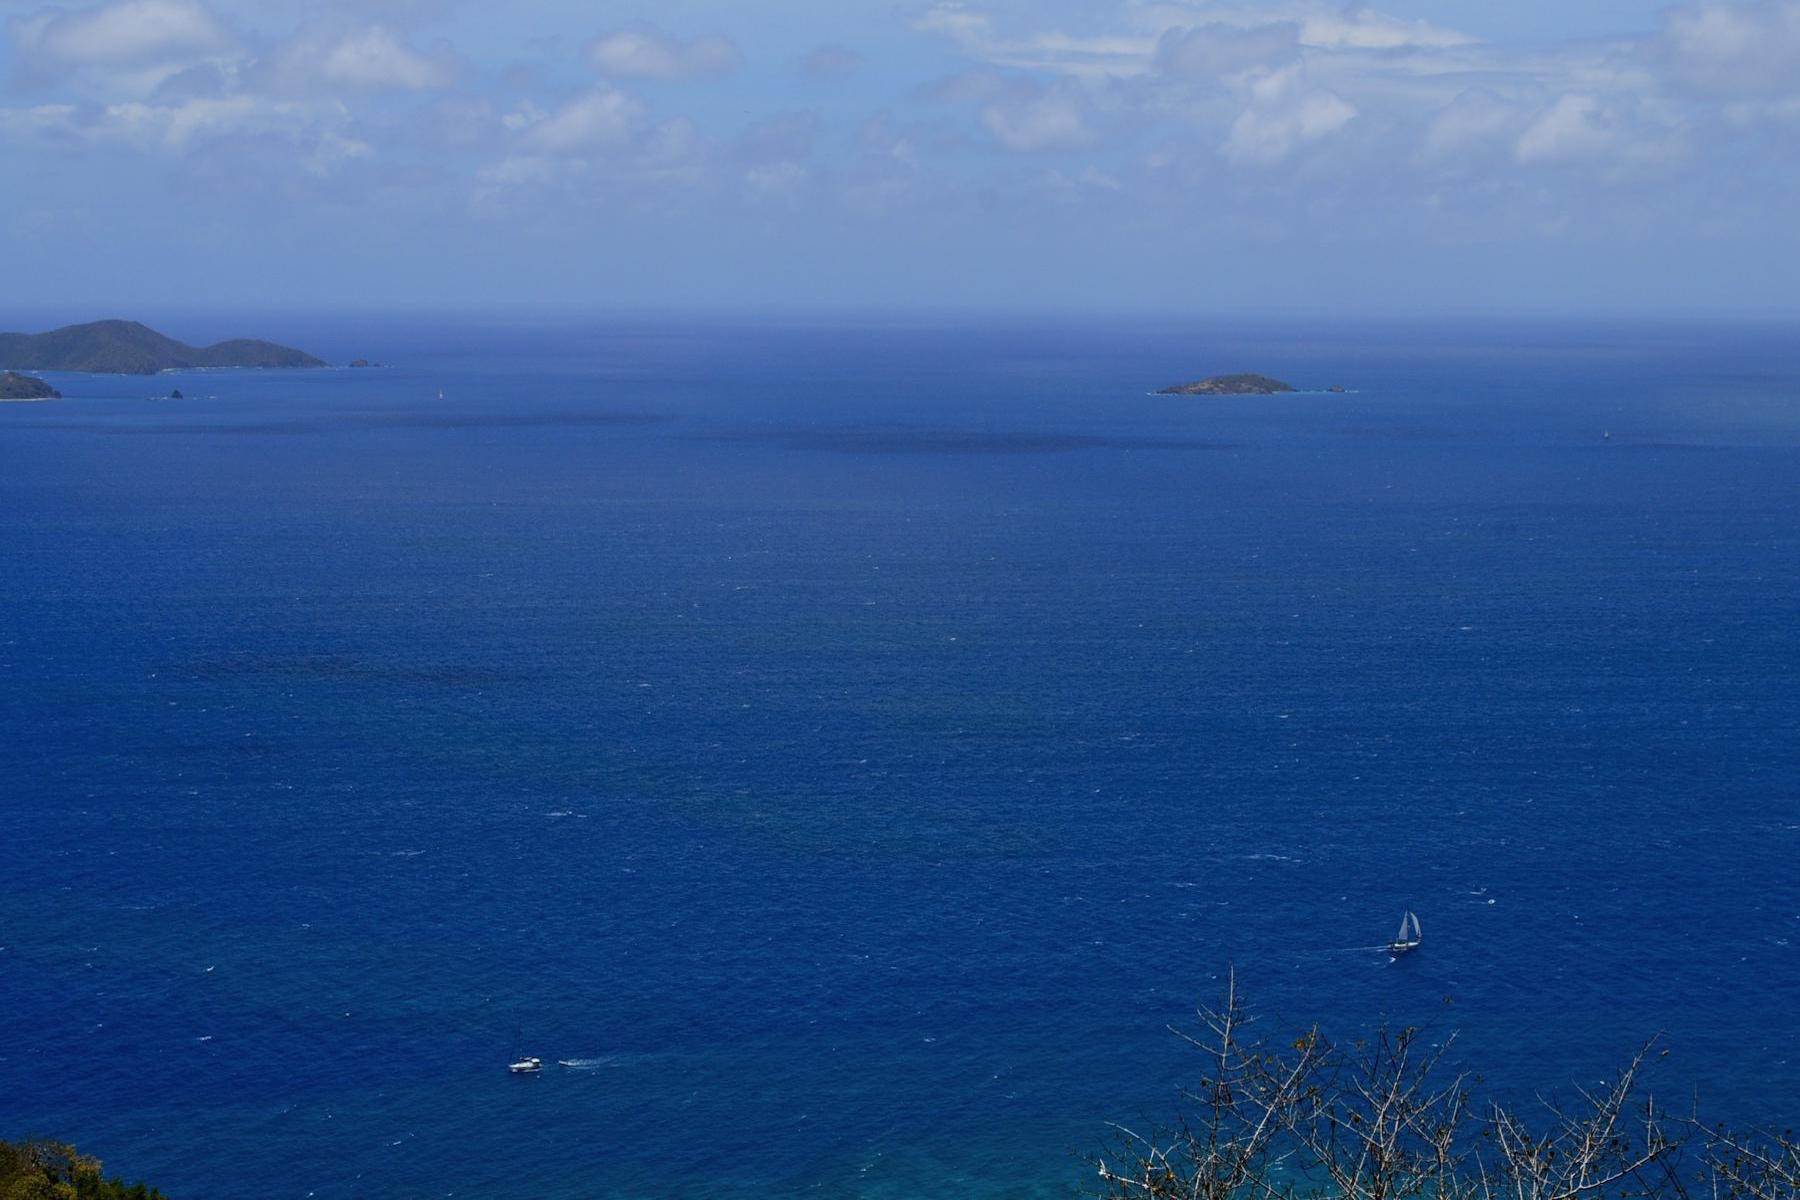 5. Terreno para Venda às Havers, Tortola Ilhas Virgens Britânicas